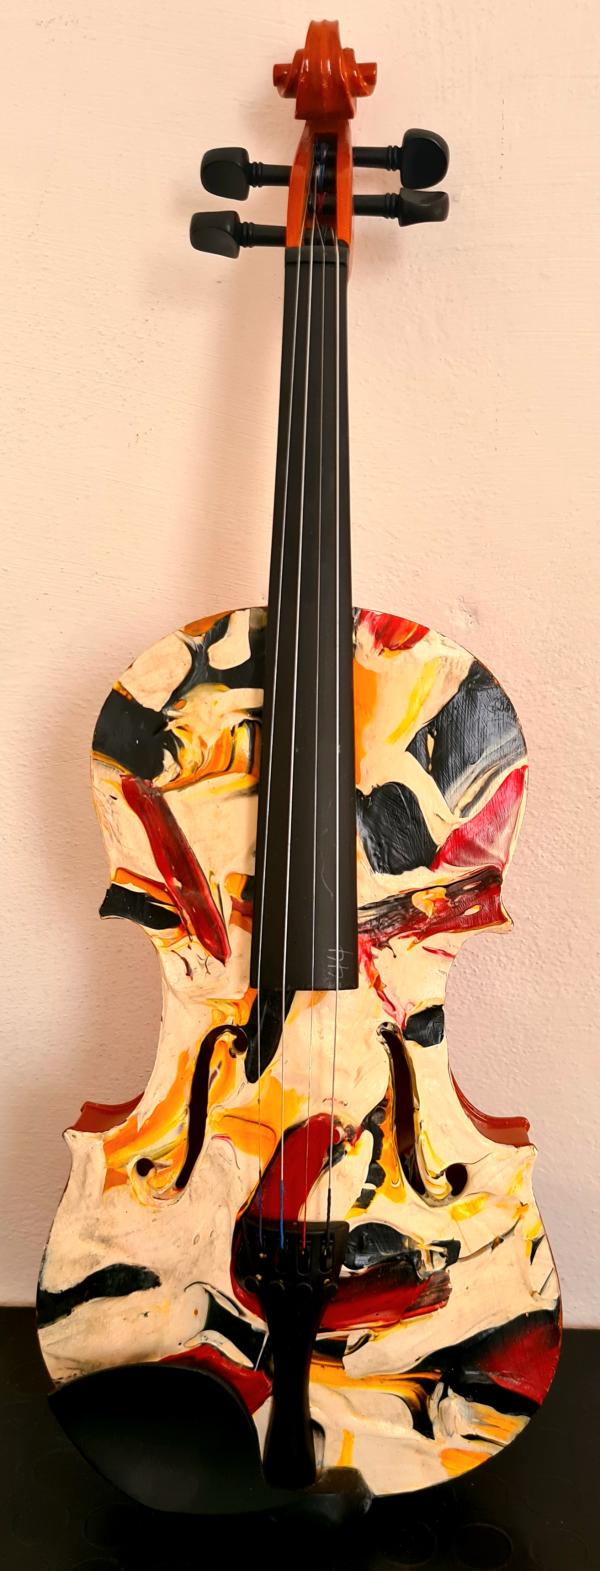 Pierluigi De Lutti Tecnica mista su violino Asta n.19 | Gigarte